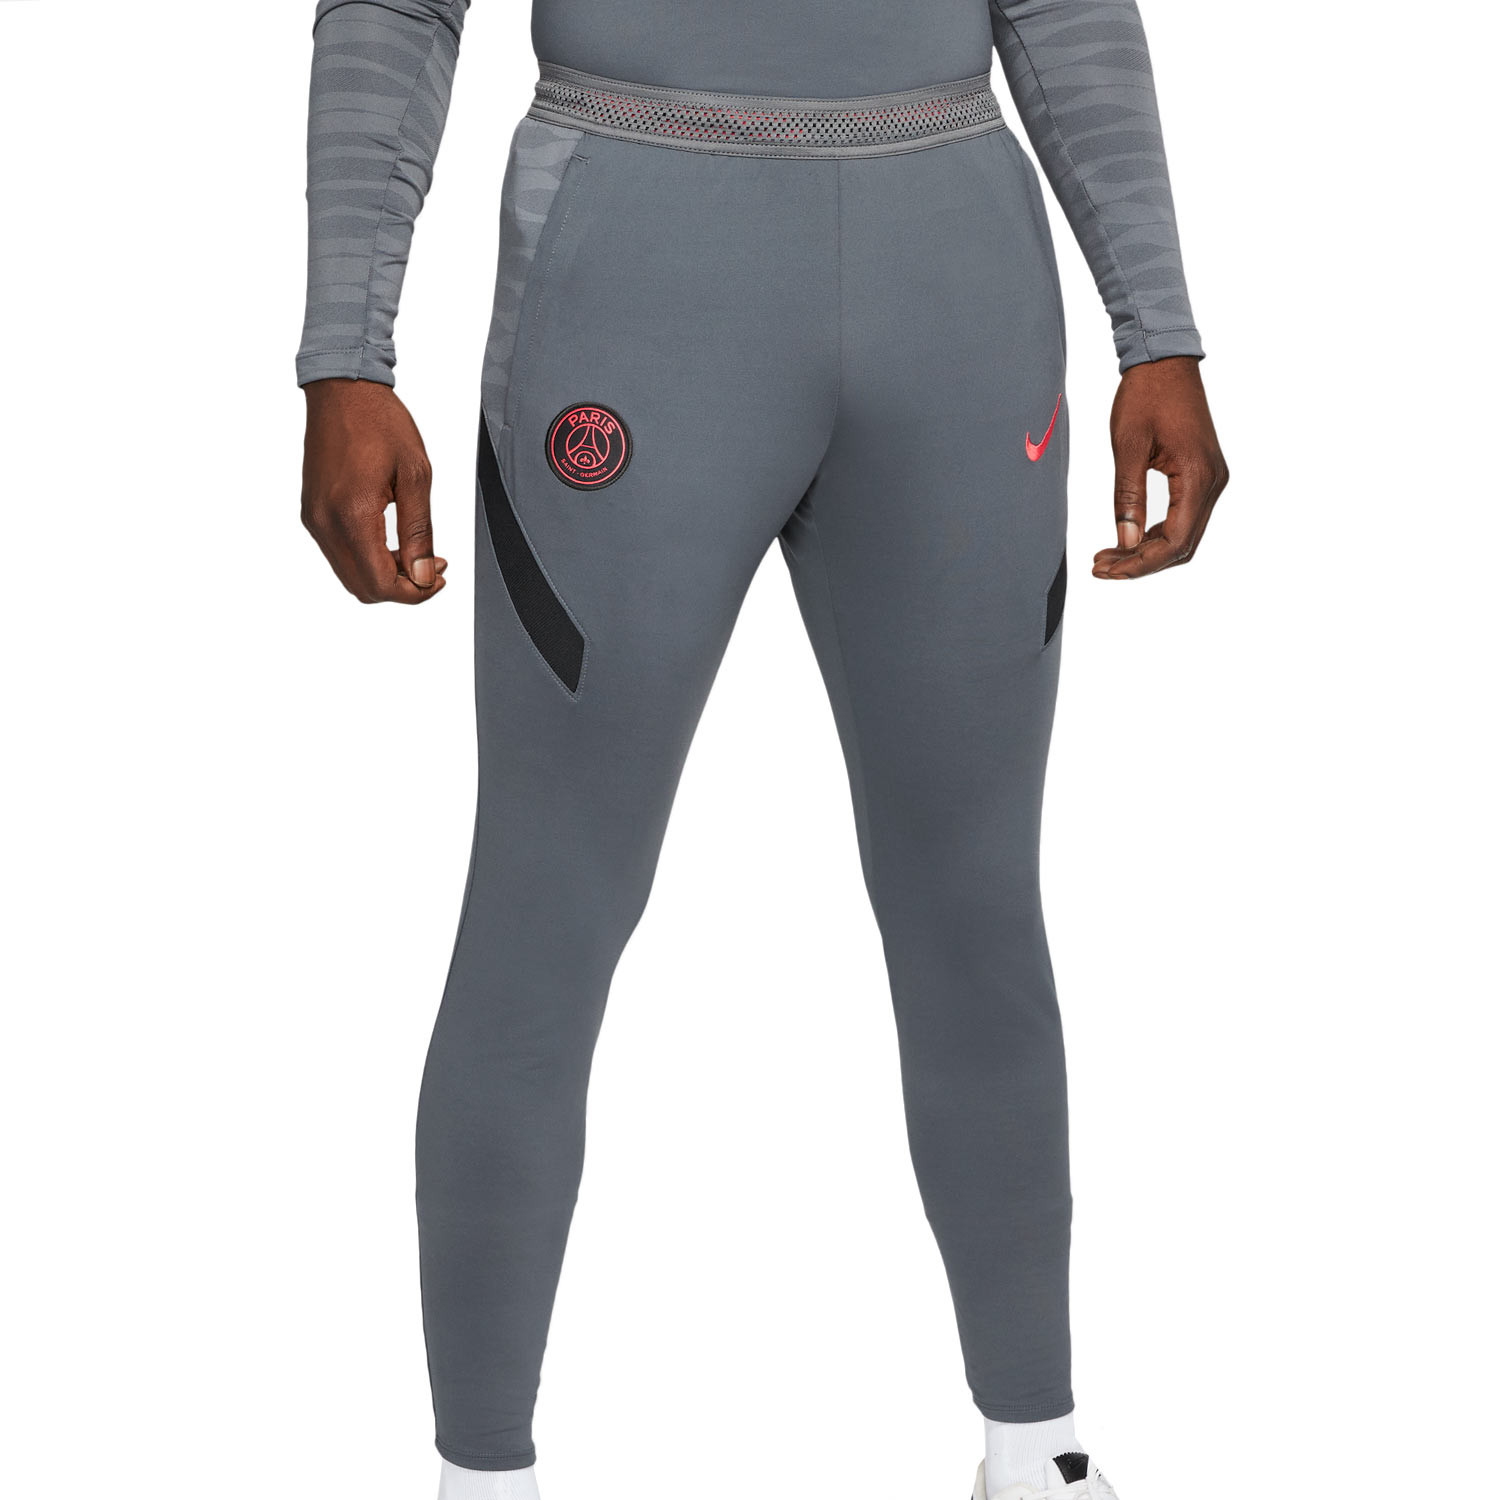 Pantalón Nike Strike UCL gris oscuro |